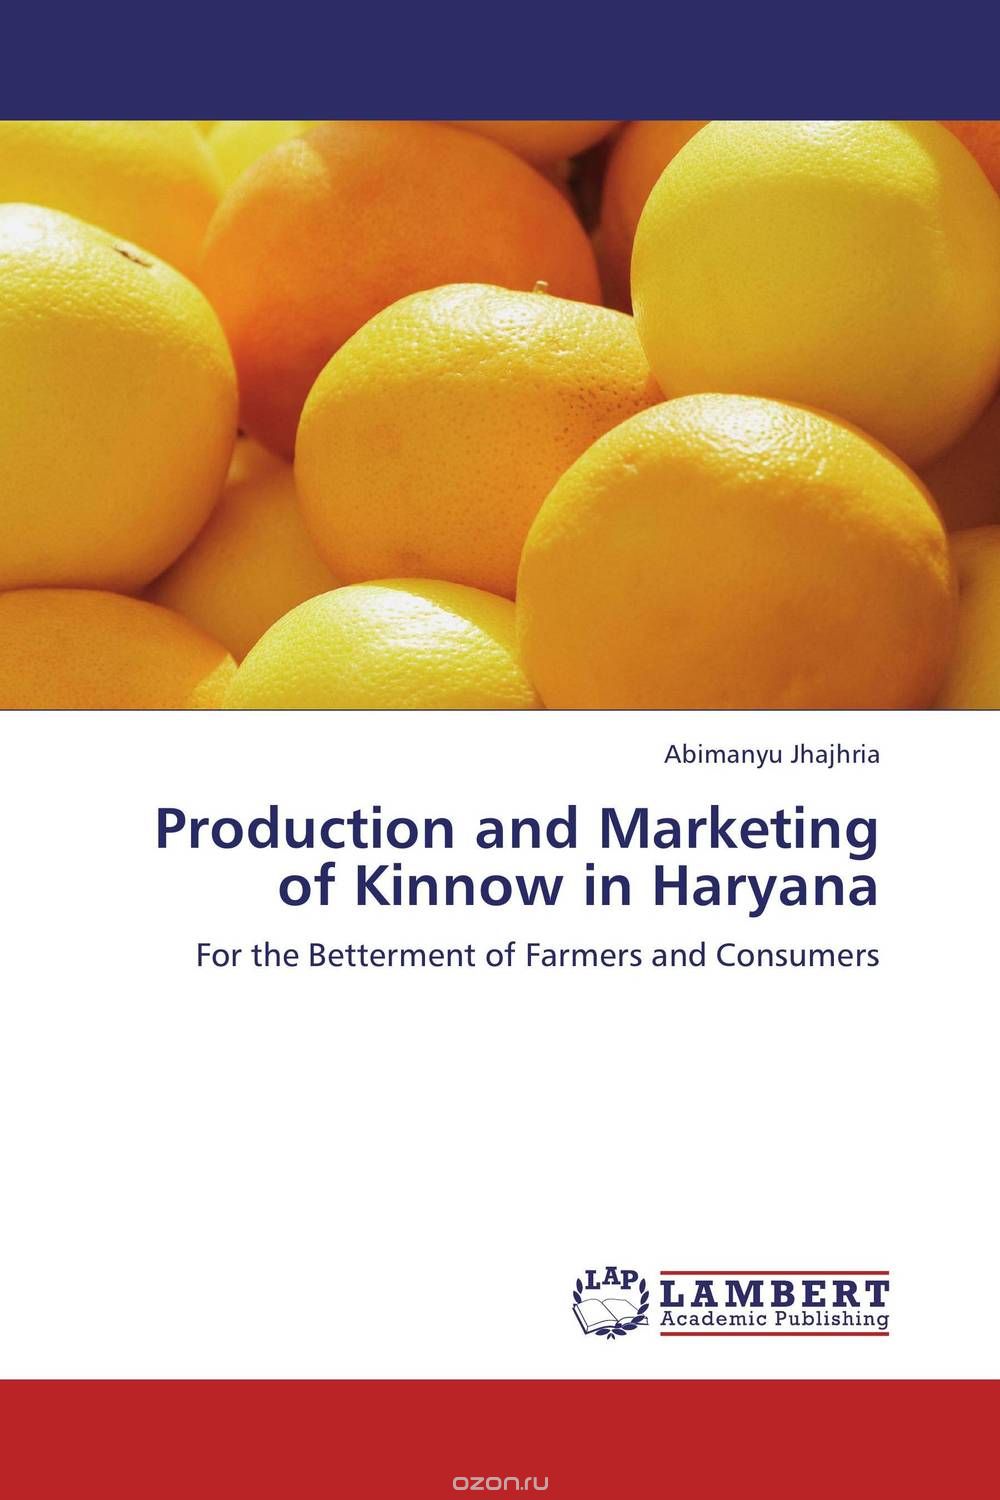 Скачать книгу "Production and Marketing of Kinnow in Haryana"